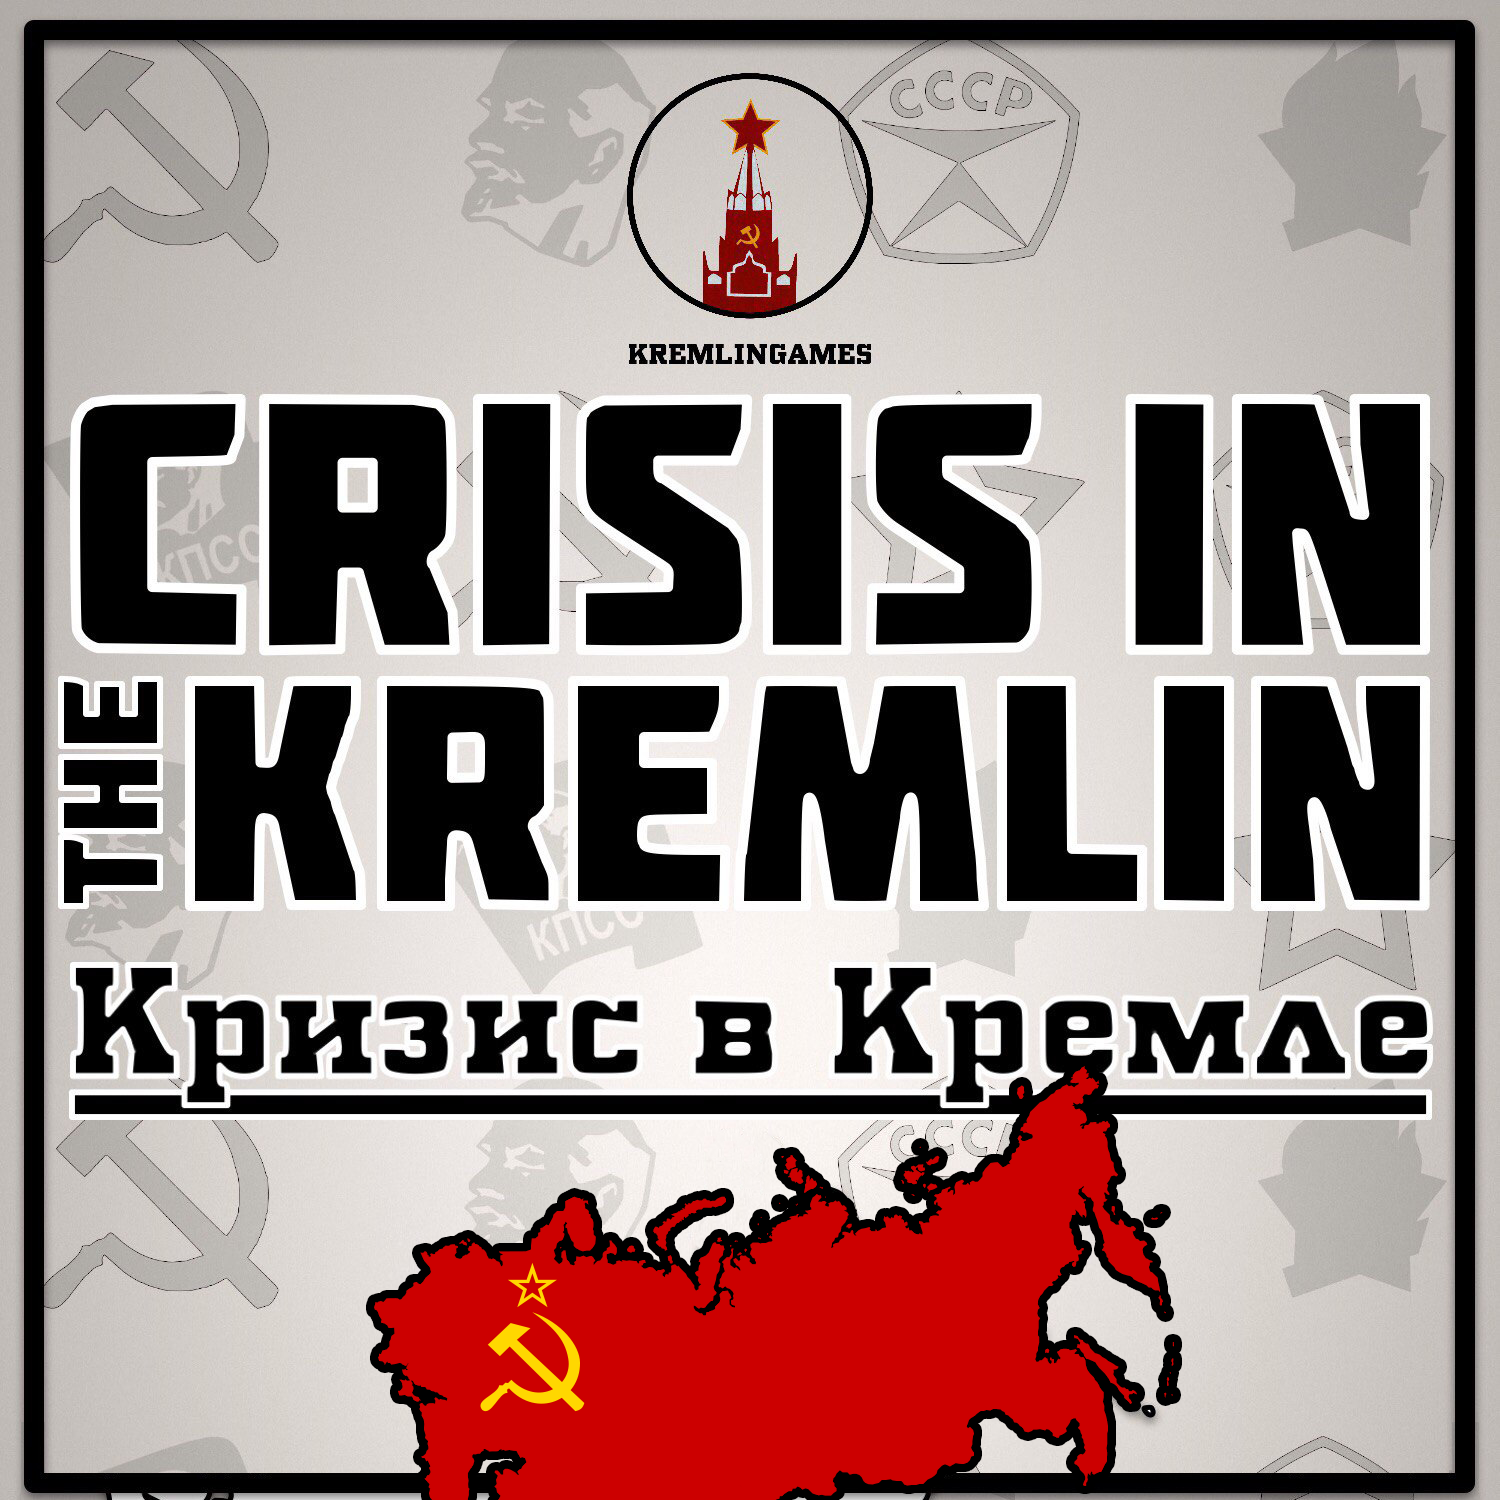 Crisis in the Kremlin игра. Кризис в Кремле. Crisis in the Kremlin 2017. Кризис в Кремле игра 2017.